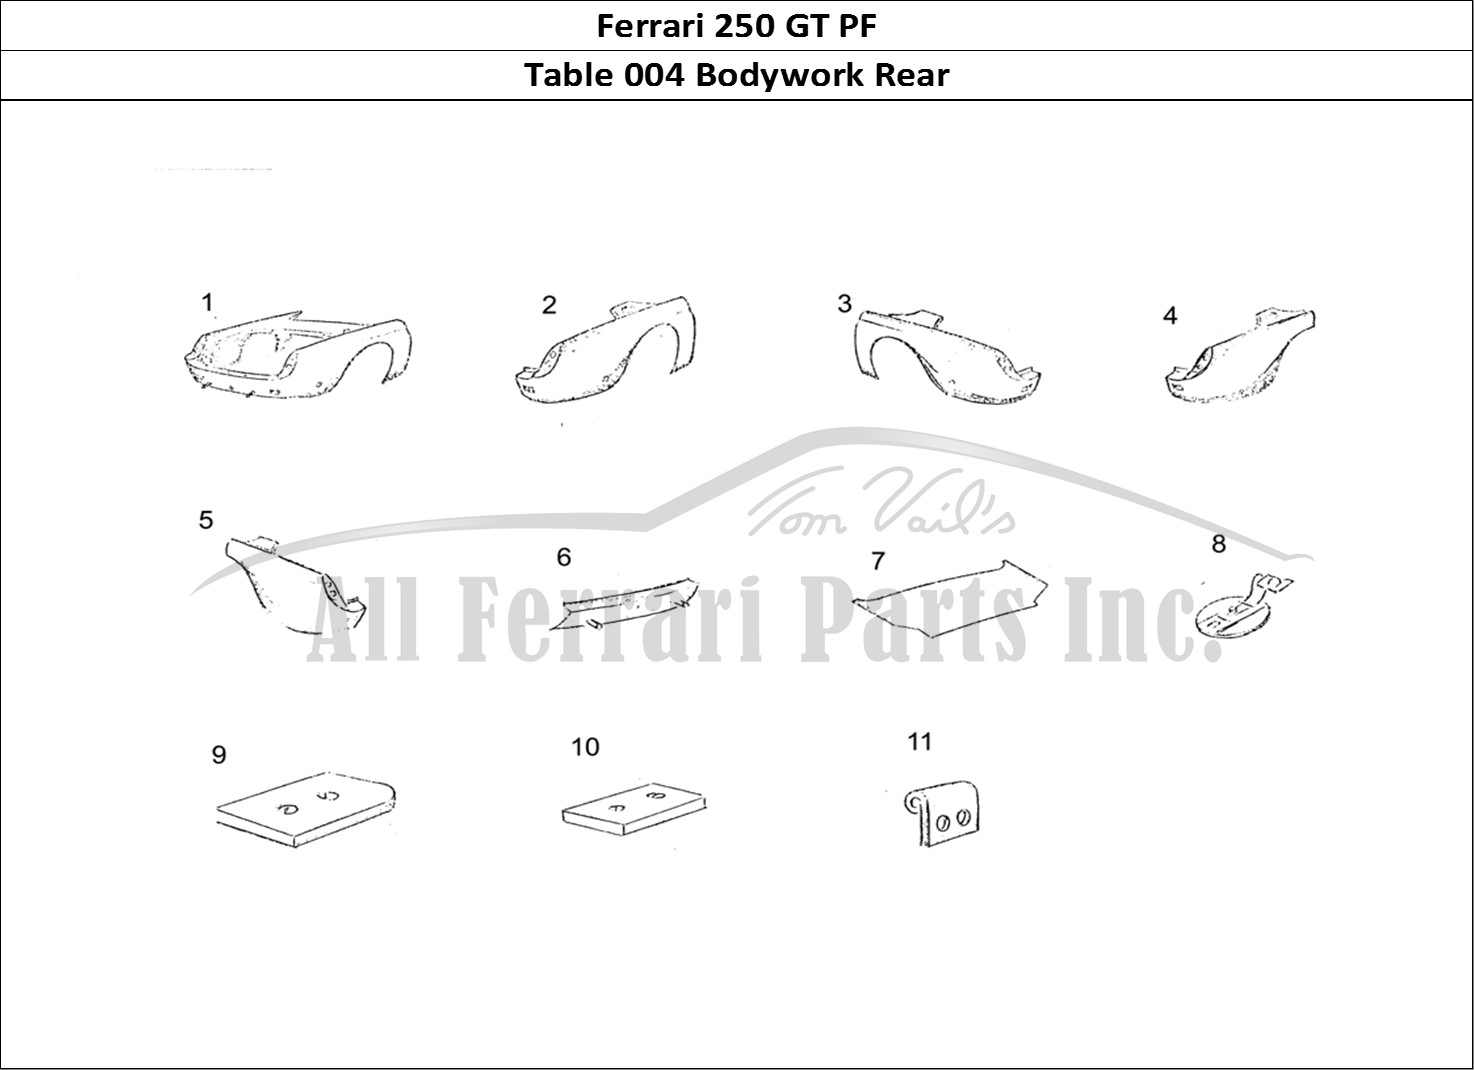 Ferrari Parts Ferrari 250 GT (Coachwork) Page 004 Body Rear